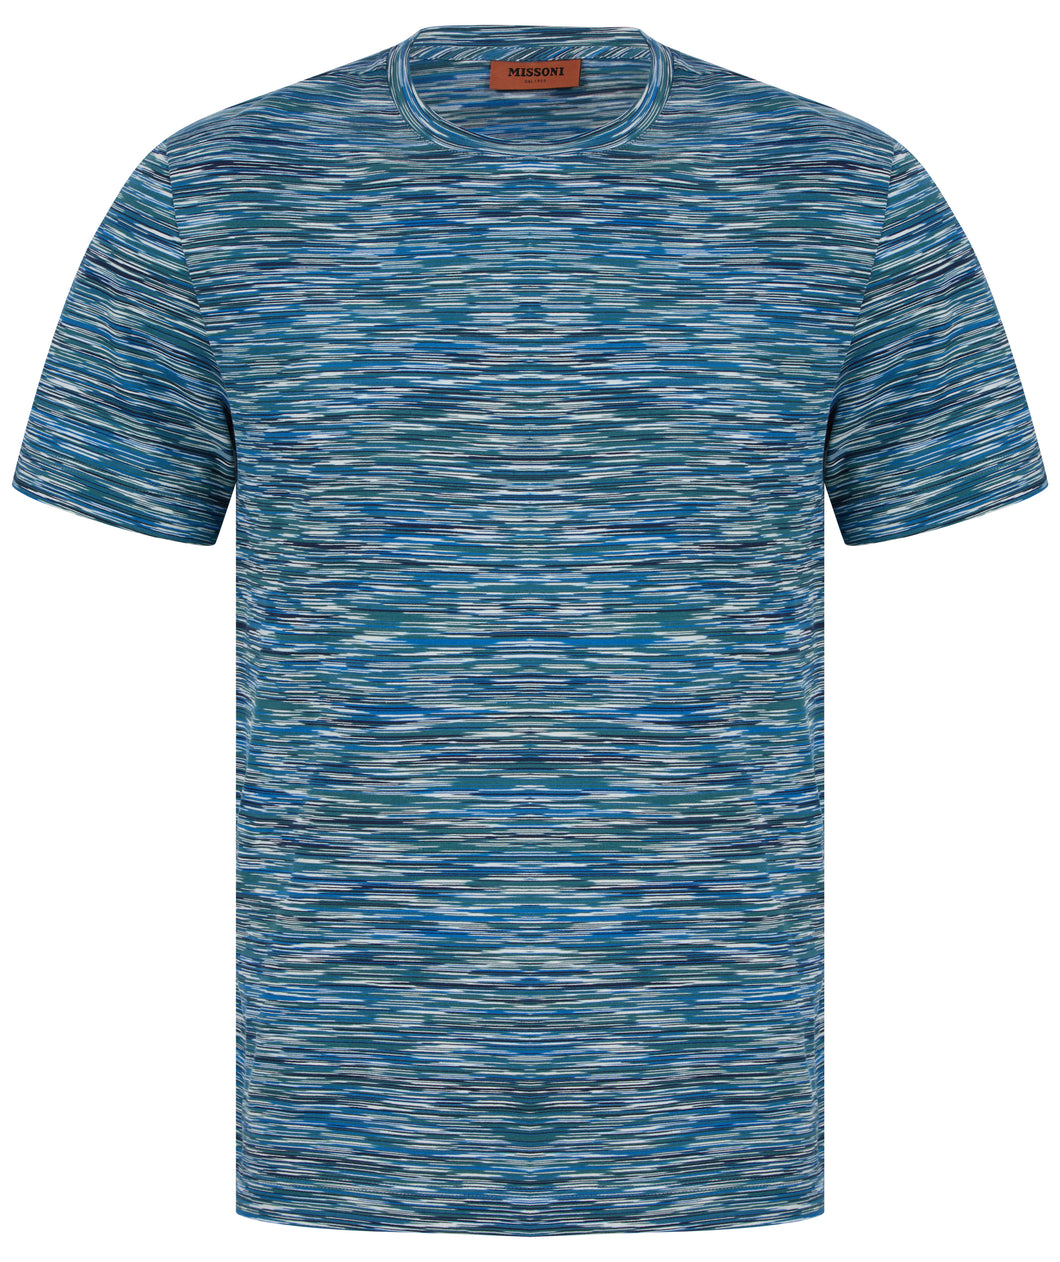 Missoni Stripe T Shirt Aqua Blue